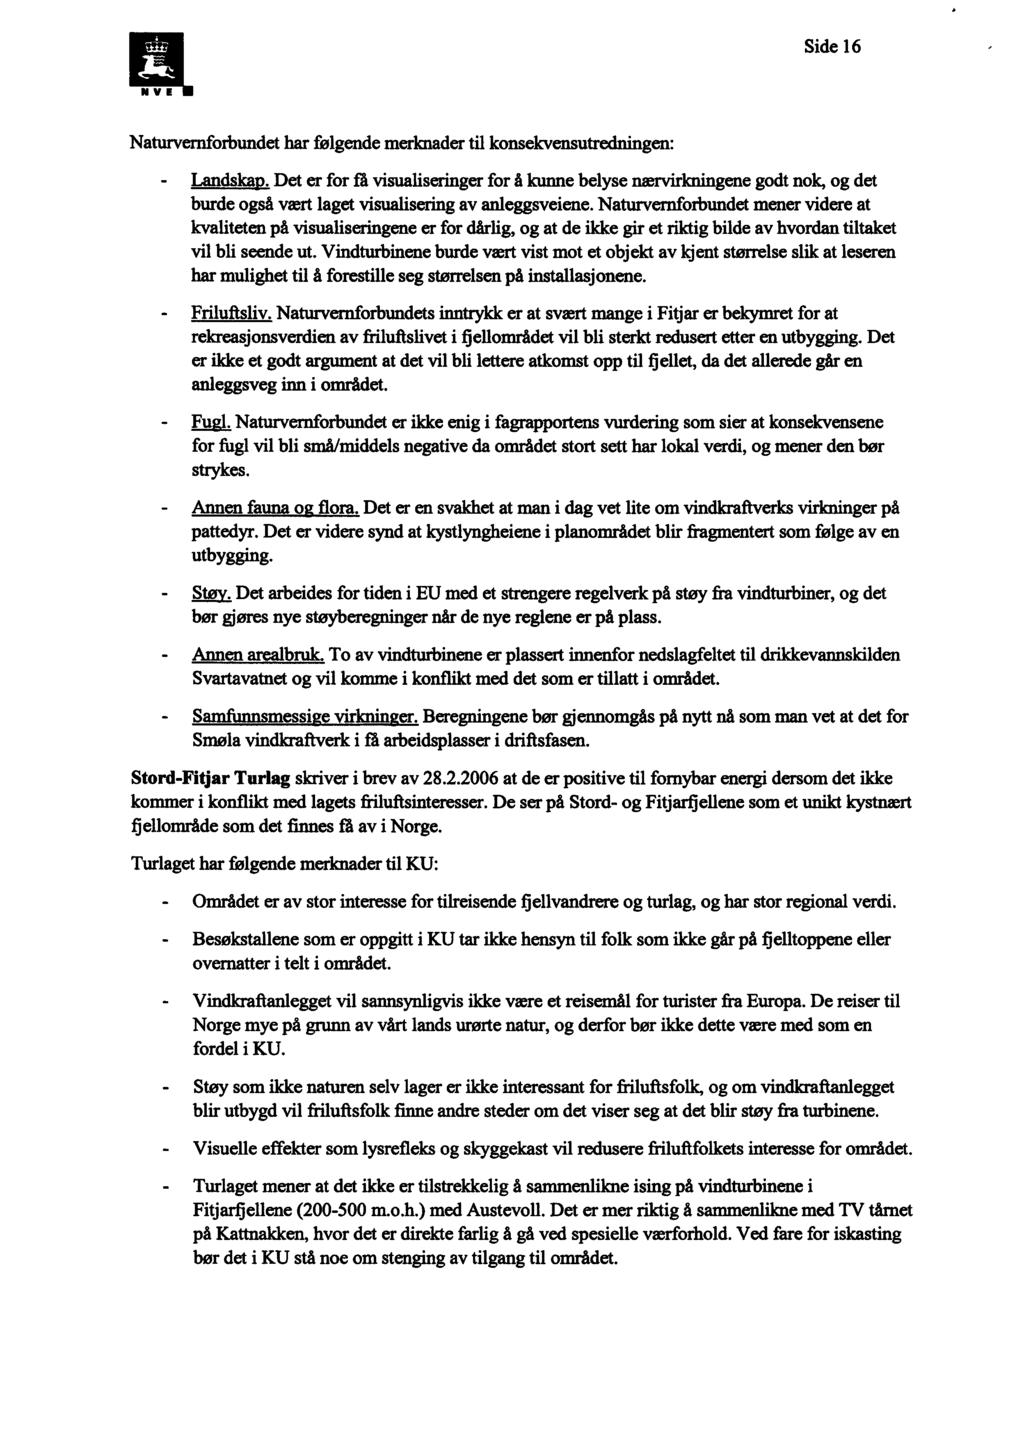 Side 16 NVE Naturvernforbundet har følgende merknader til konsekvensutredningen: - Landskar.